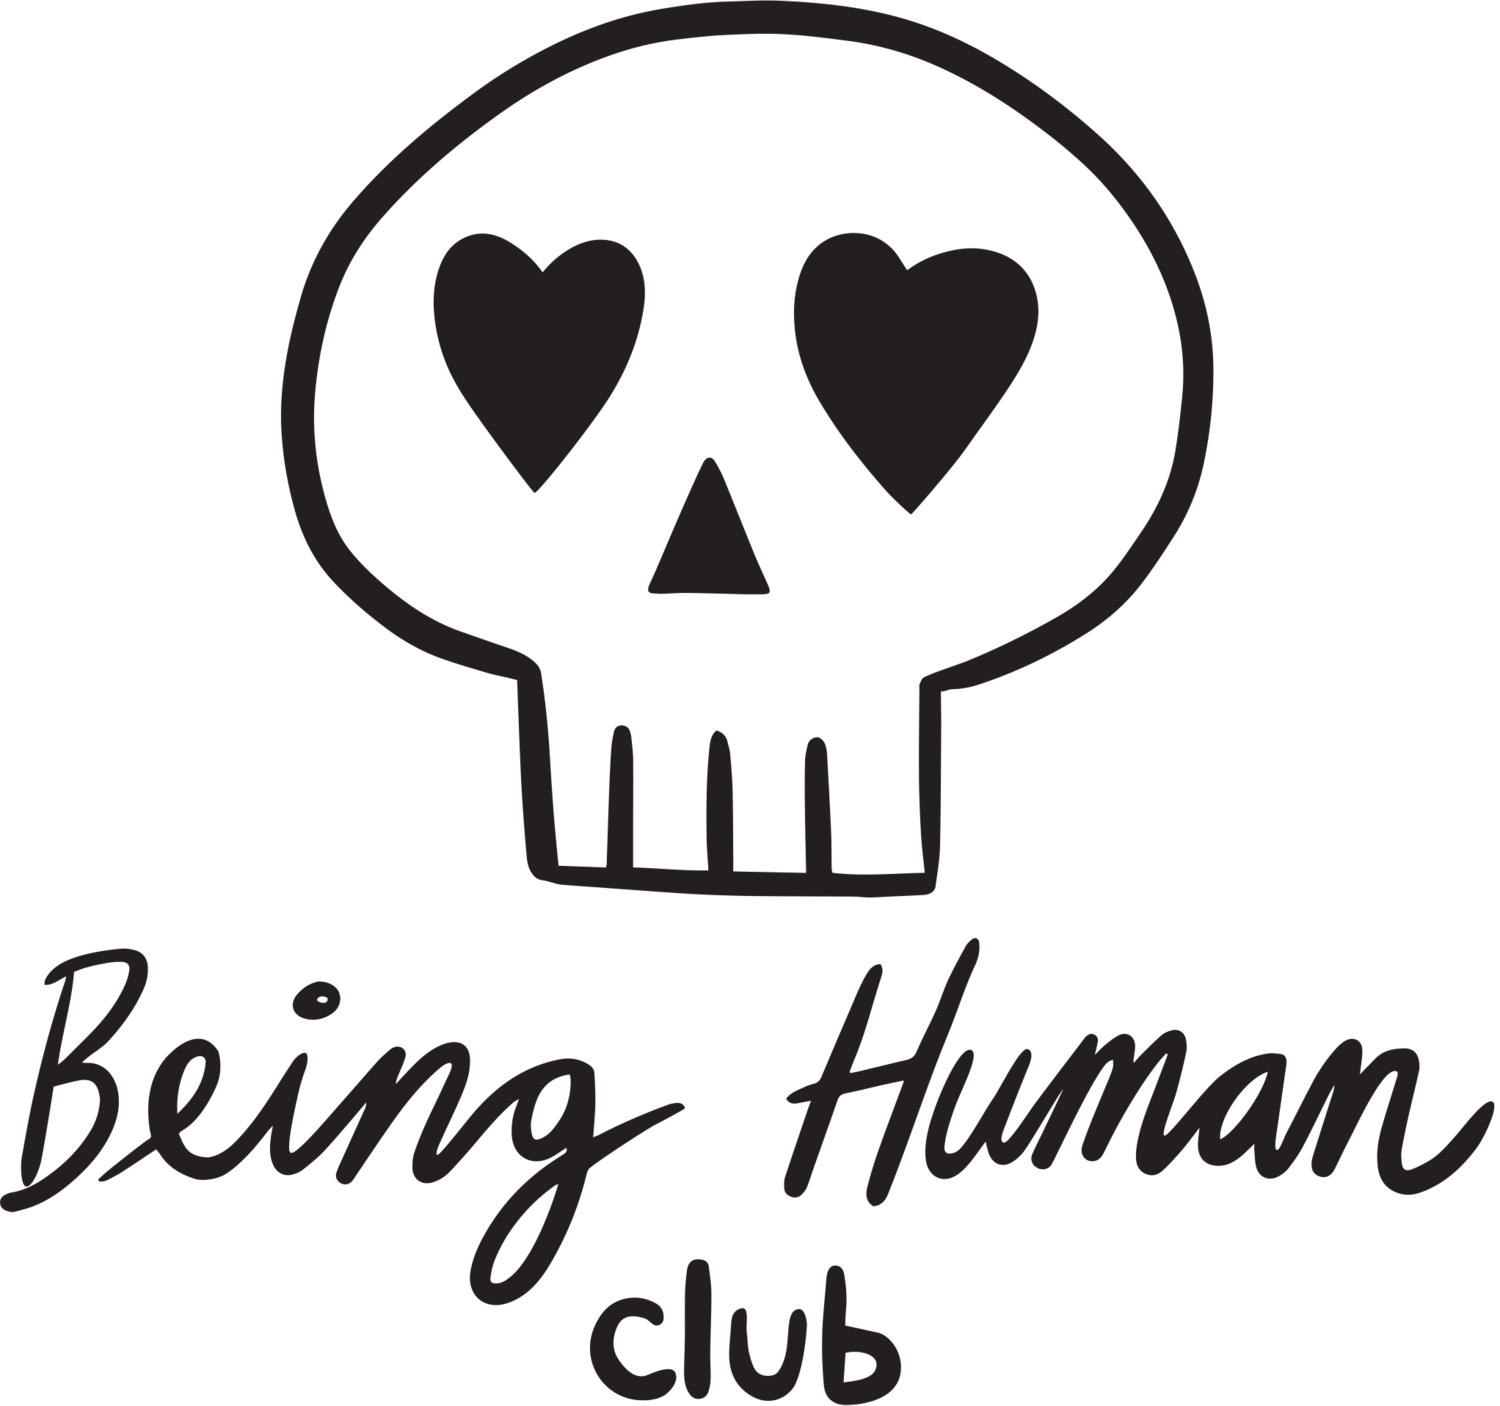 Being Human Club